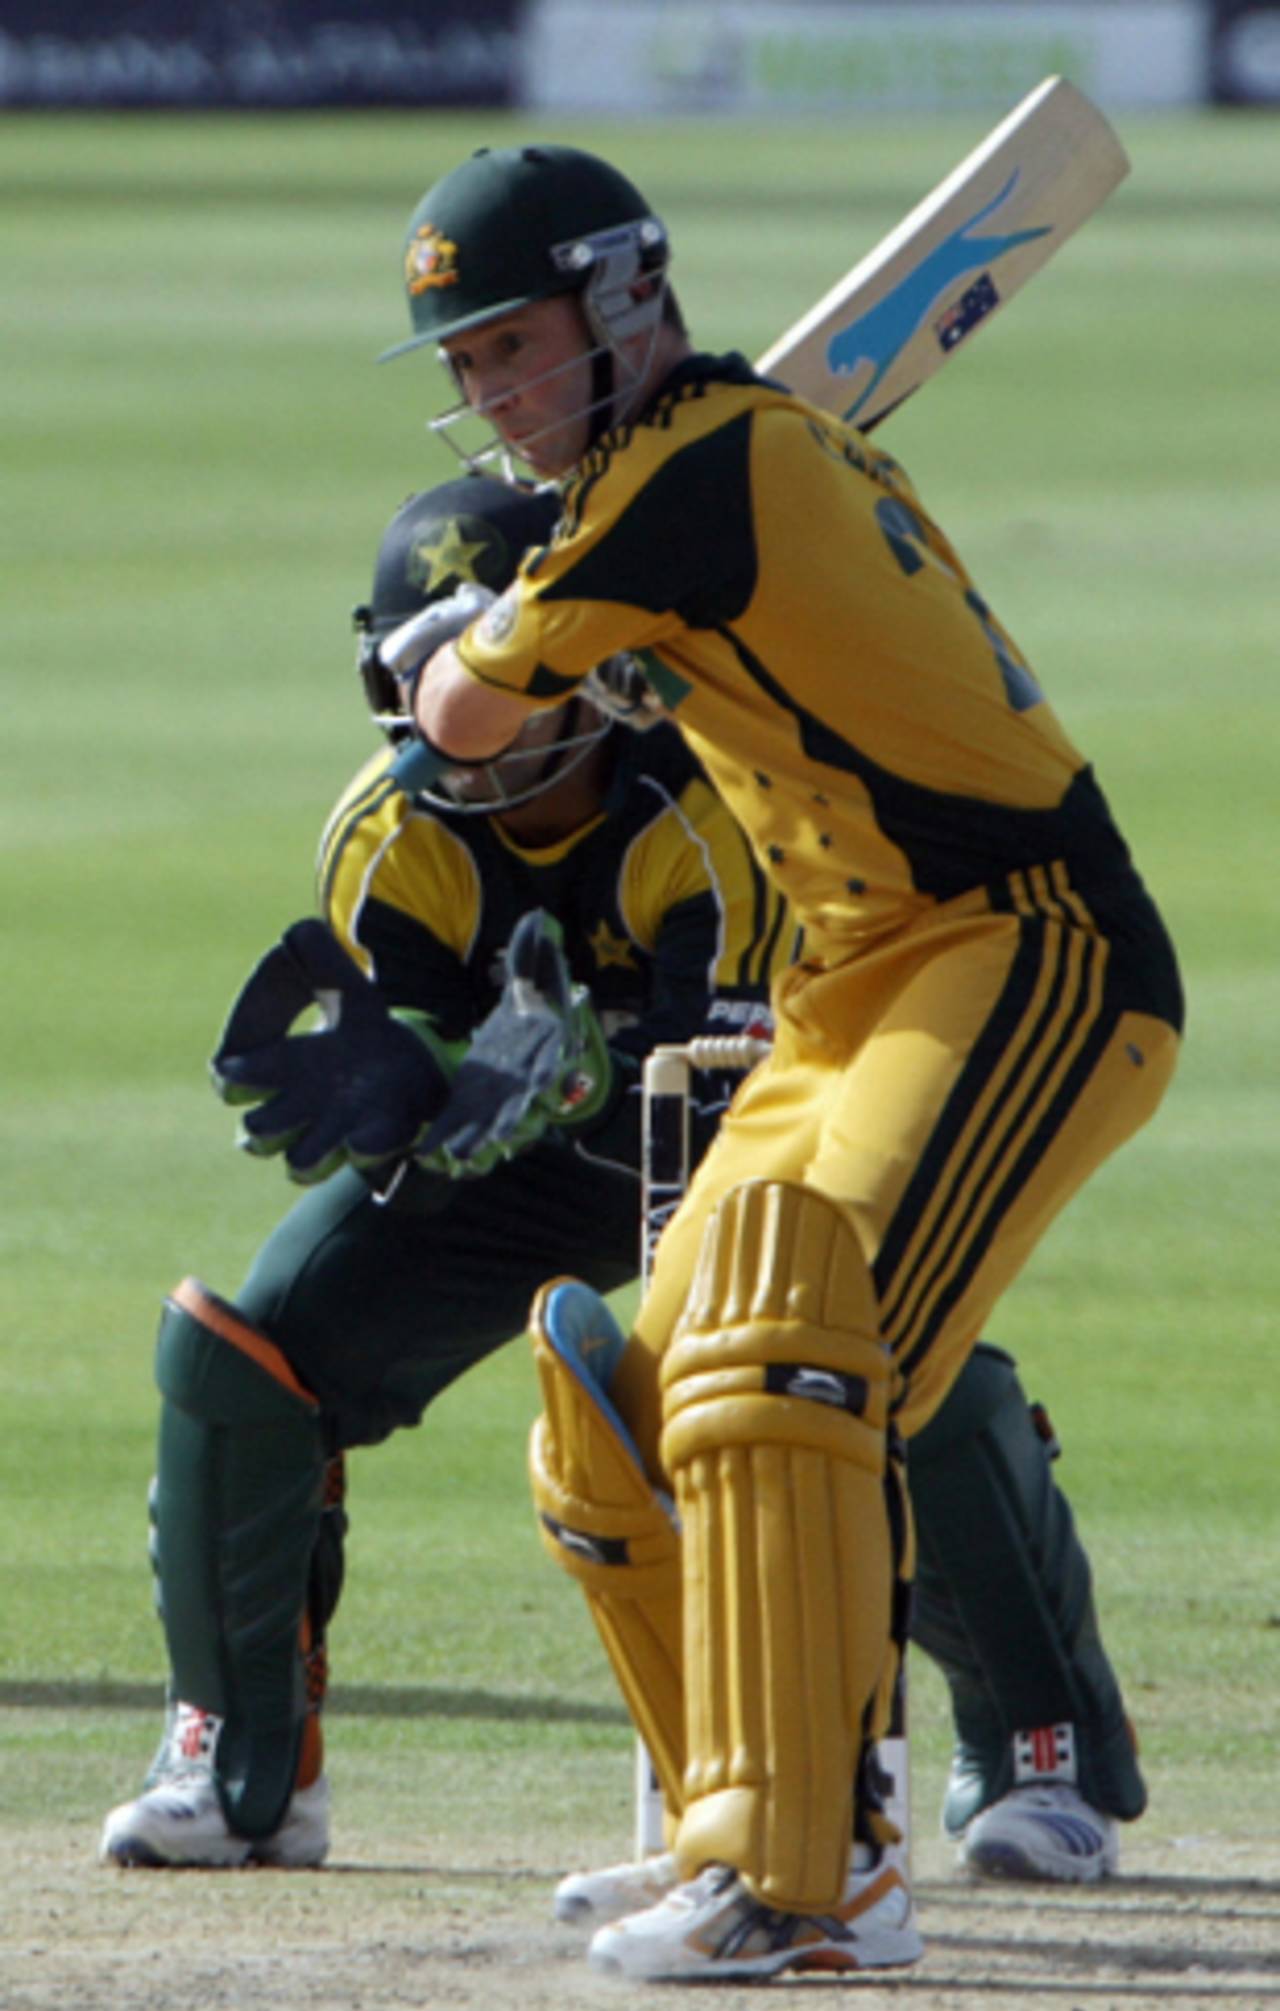 Michael Clarke looks to cut, Pakistan v Australia, 5th ODI, Abu Dhabi, May 3, 2009